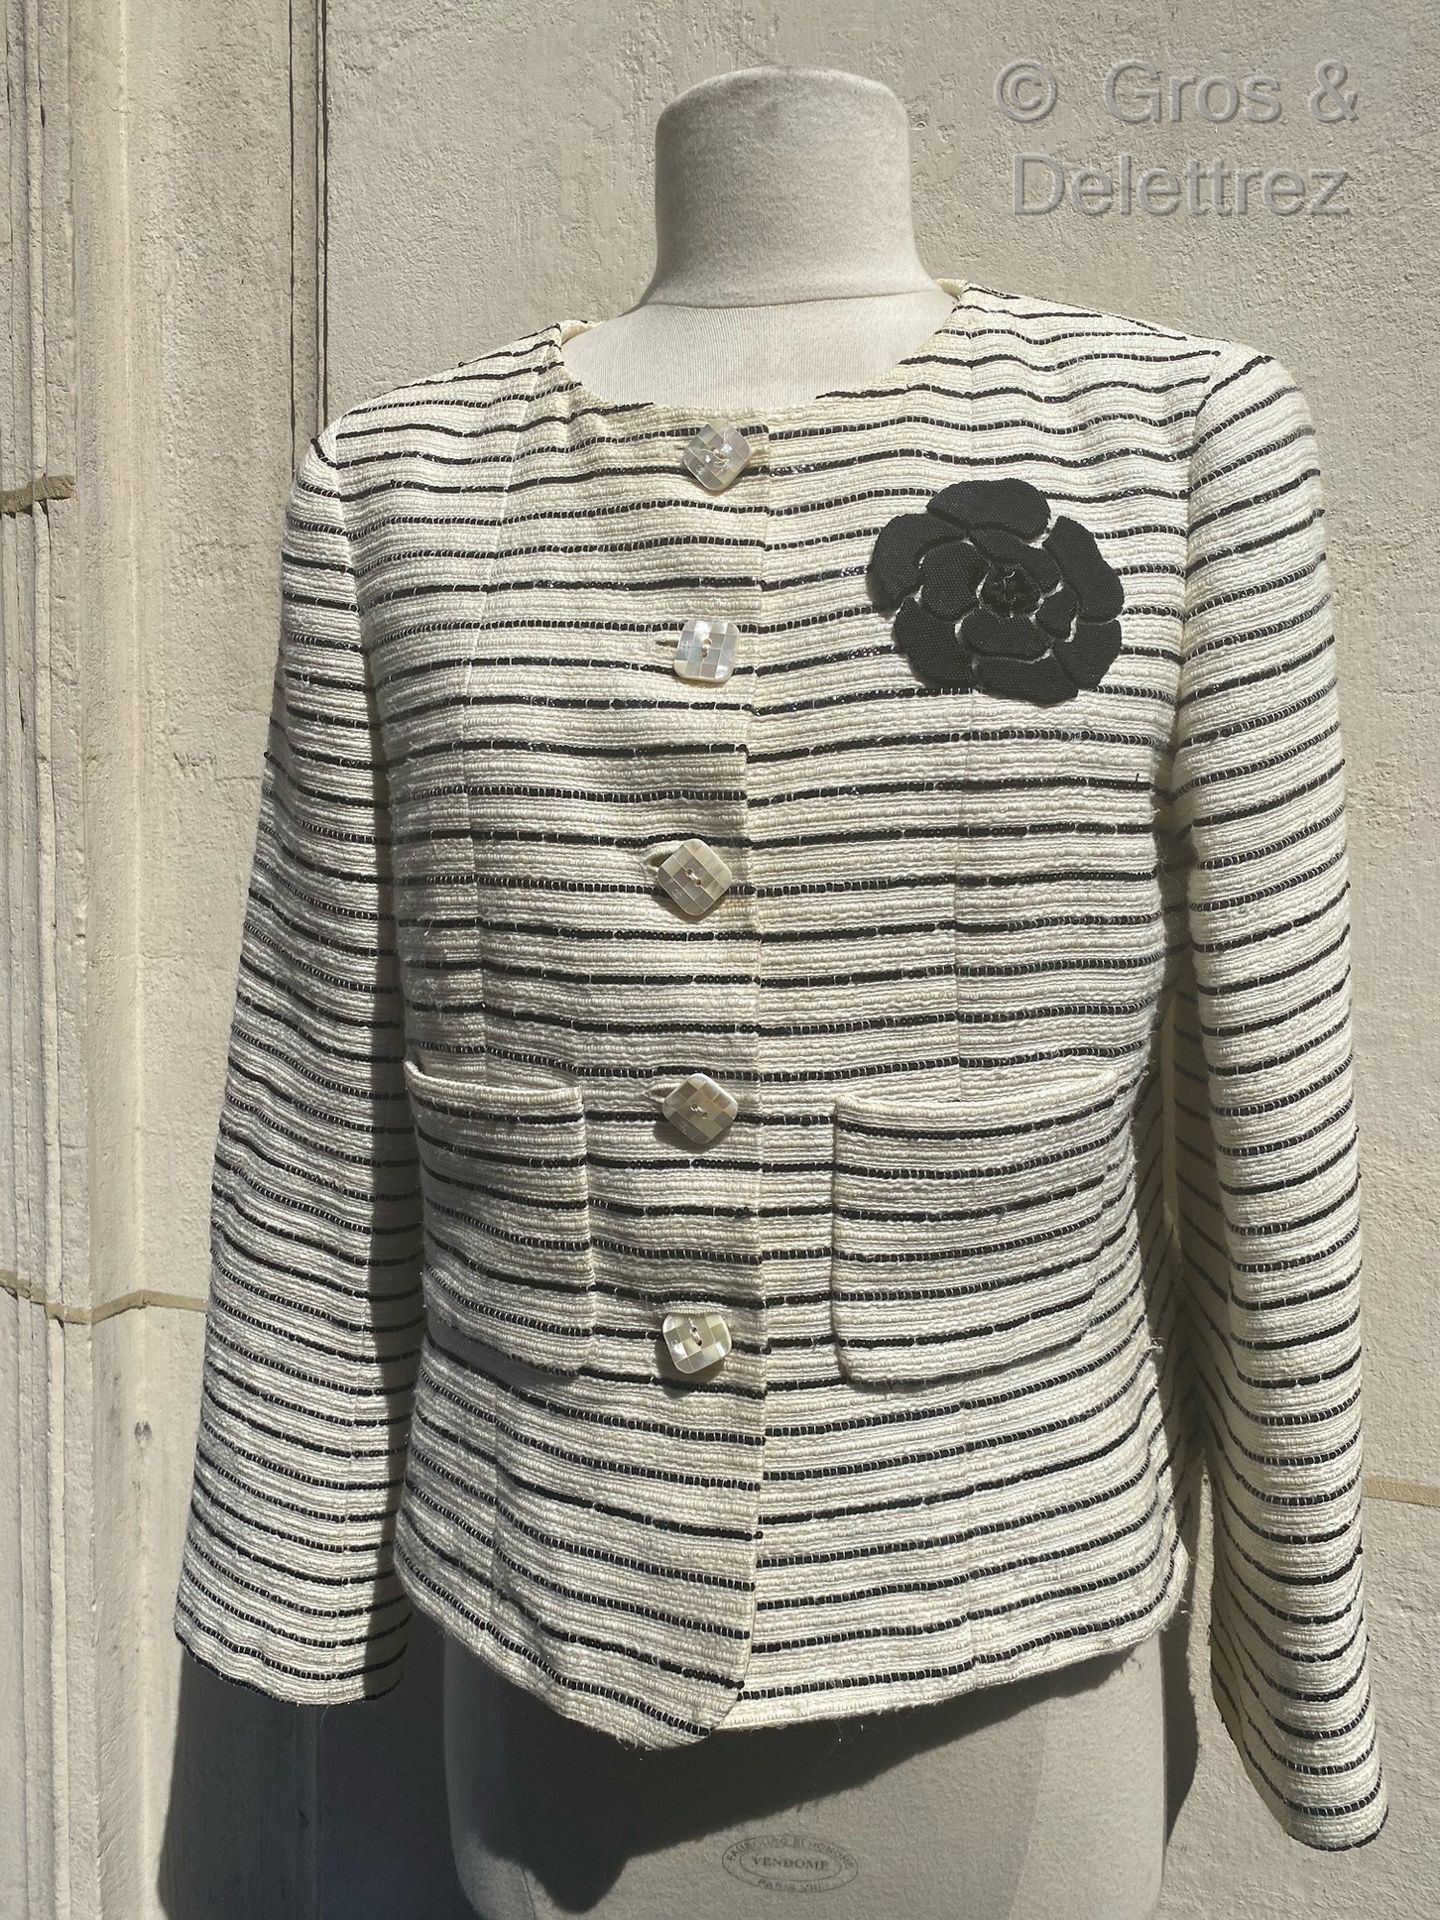 CHANEL Circa 2001

Short jacket in ecru tweed with tone-on-tone stripes, intersp&hellip;